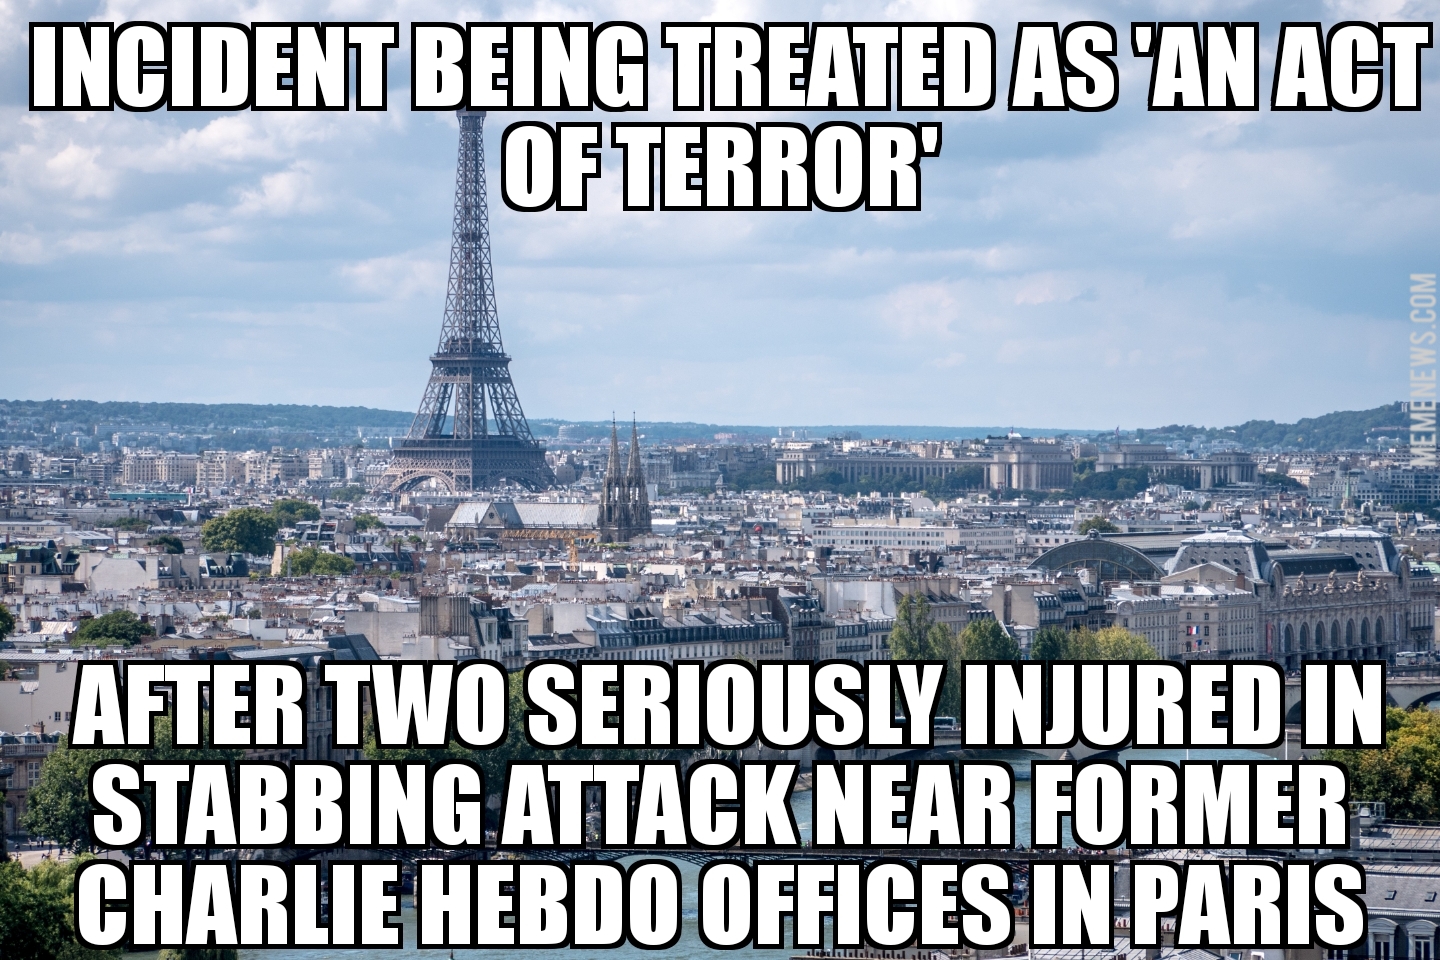 Stabbing near former Charlie Hebdo offices